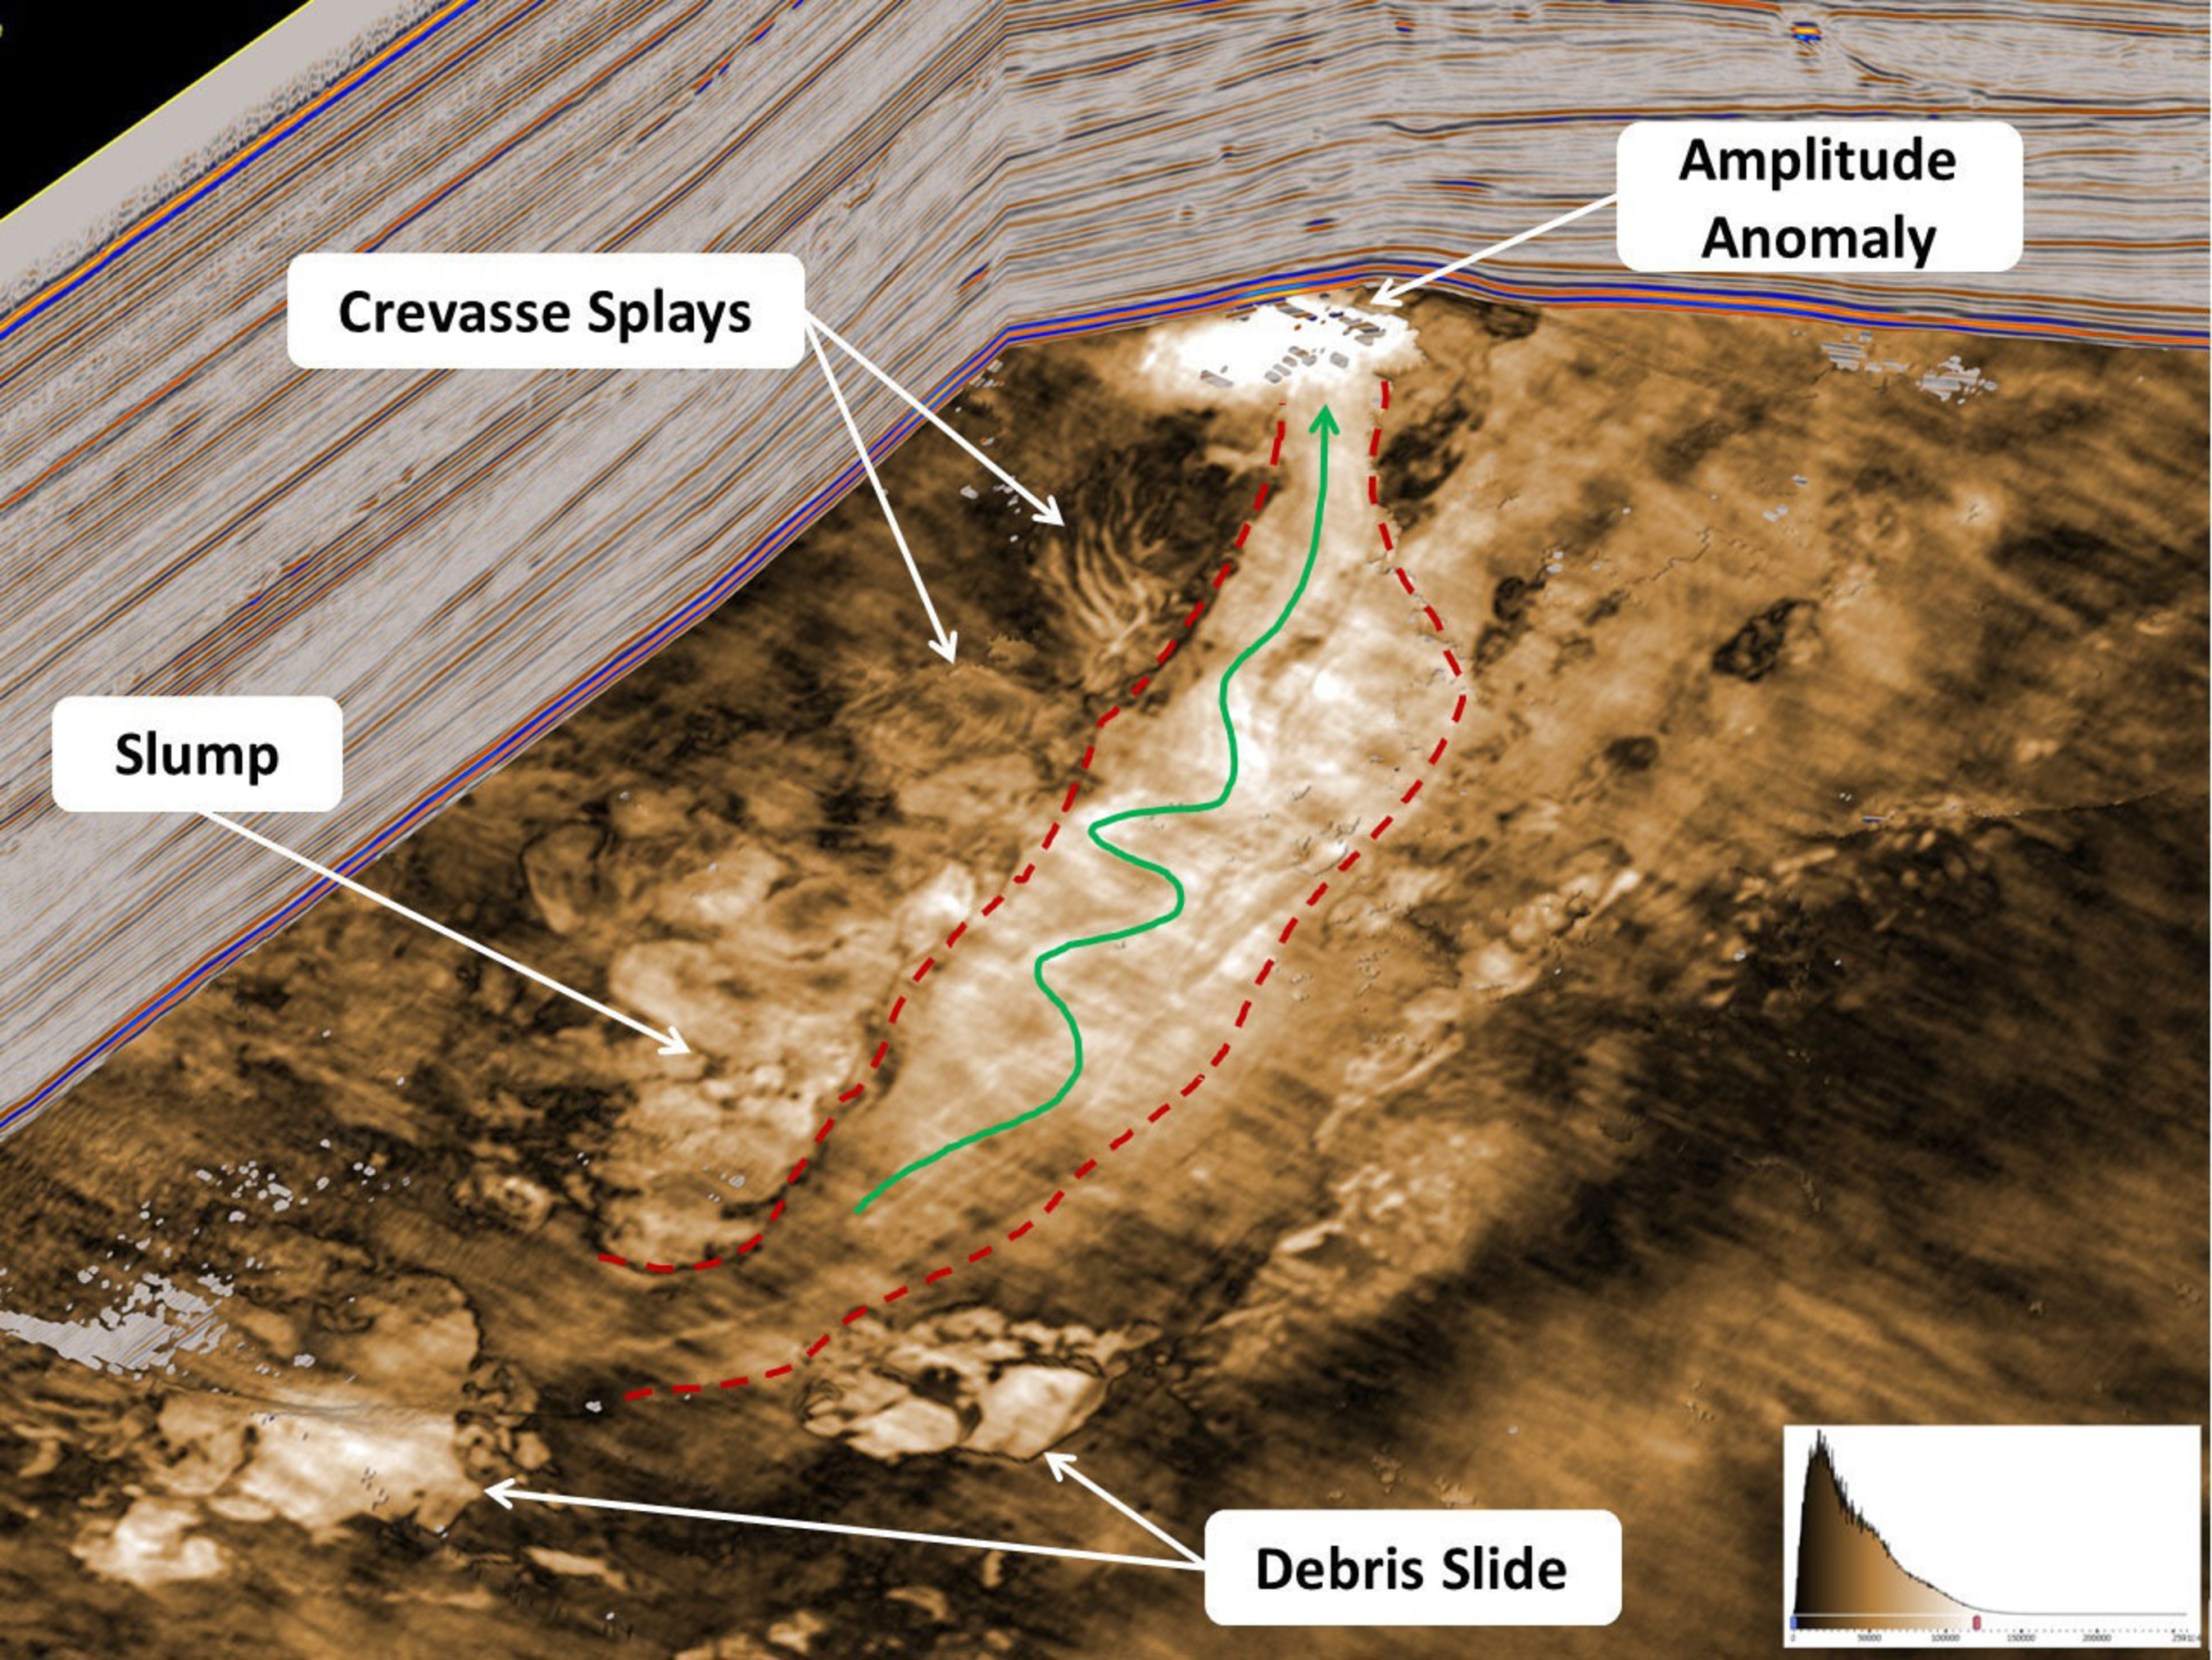 Stratigraphic slice through a deepwater depositional system reveals slump features, debris slides, and an interpreted fluid migration fairway. (Data courtesy of AWE Limited). (PRNewsFoto/Paradigm) (PRNewsFoto/PARADIGM)